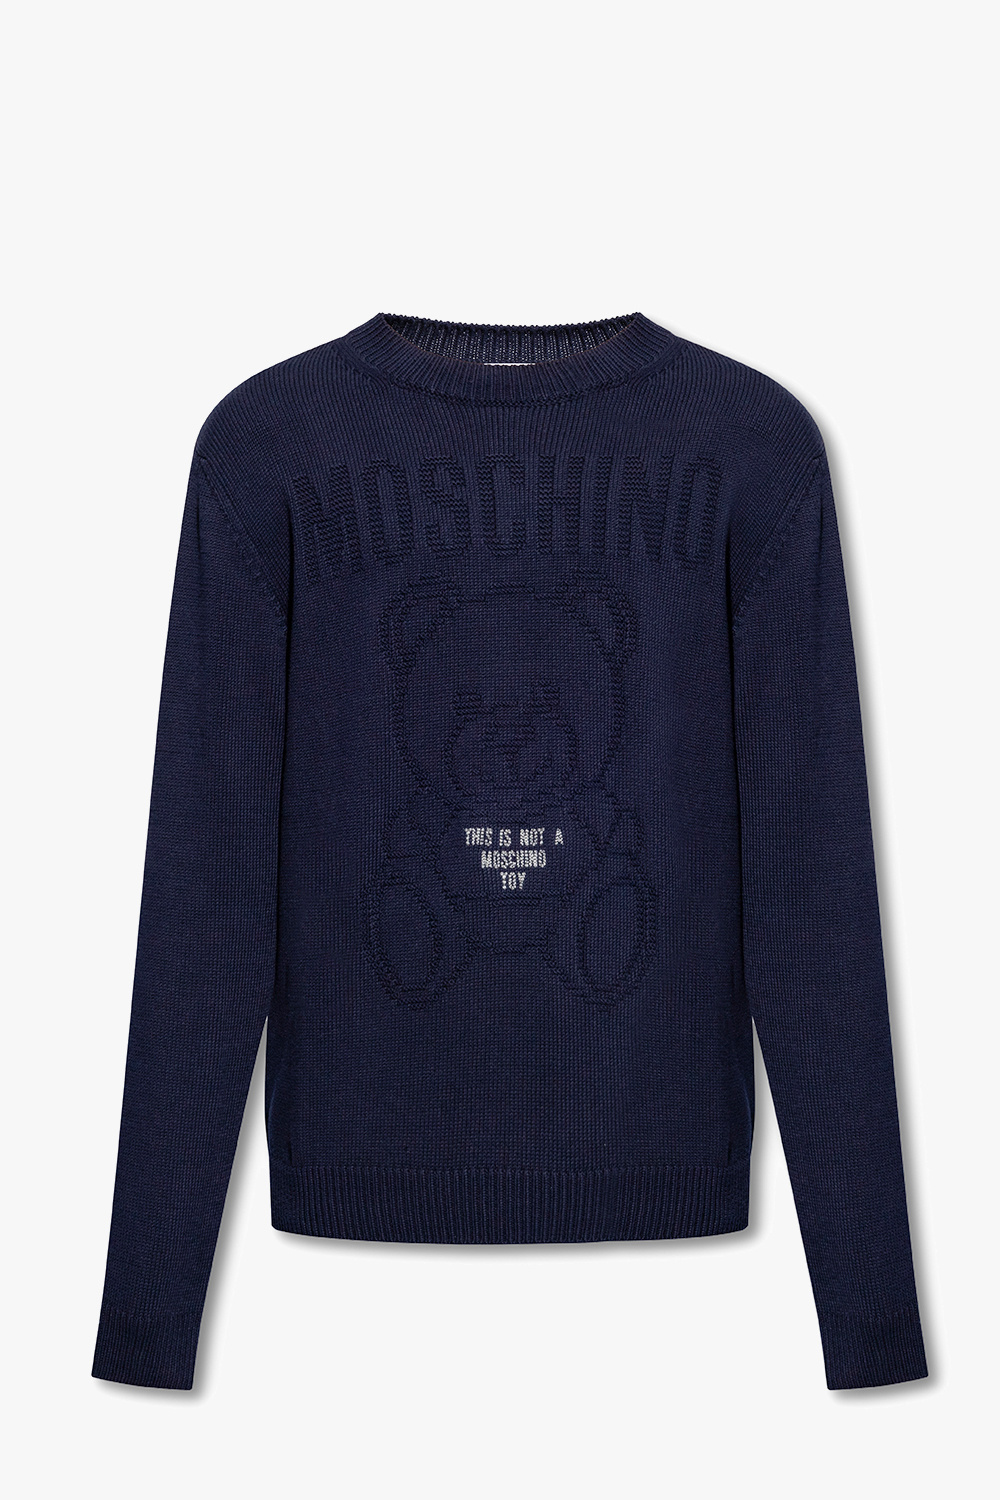 Navy blue Cotton sweater Moschino - Vitkac France